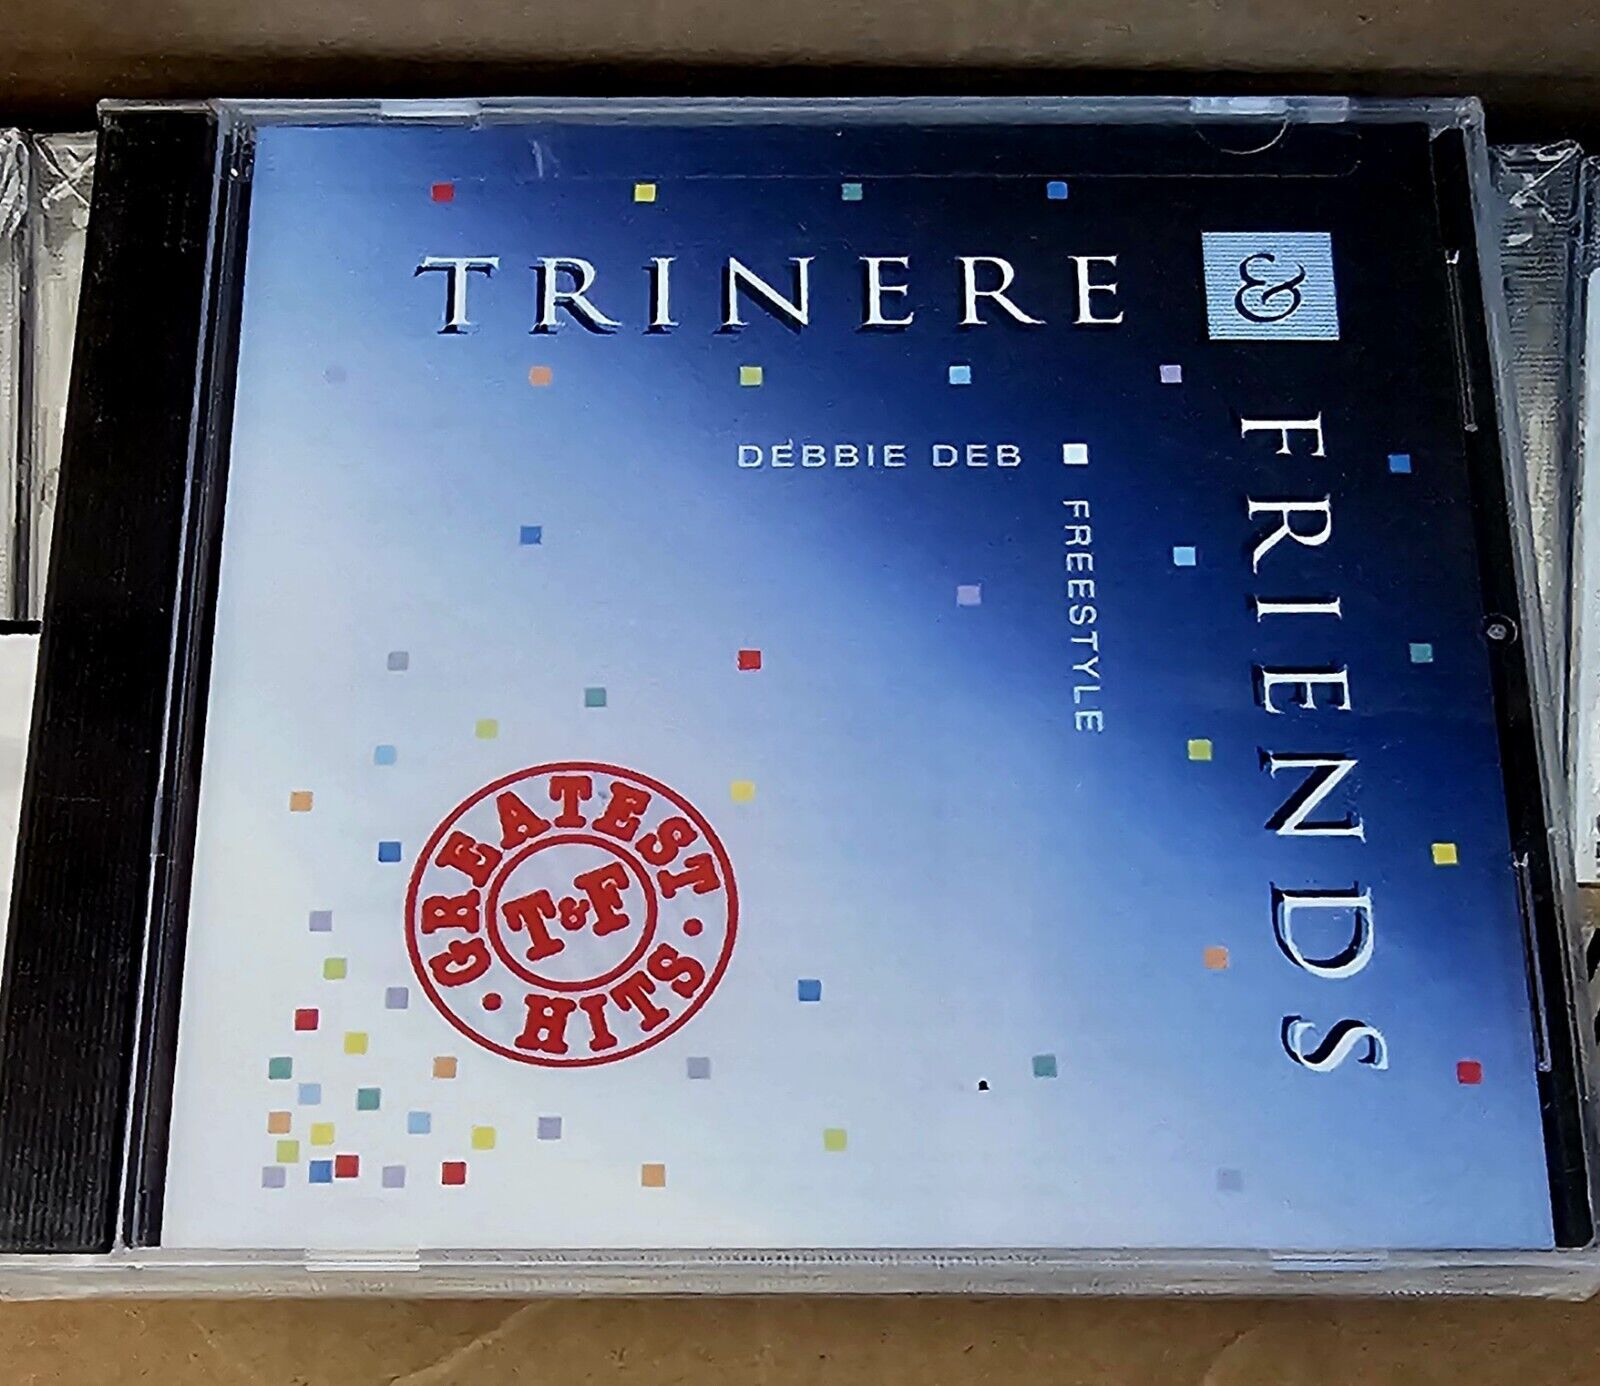 SEALED - TRINERE & FRIENDS -CD  (DEBBIE DEB , FREESTYLE) - Super Rare